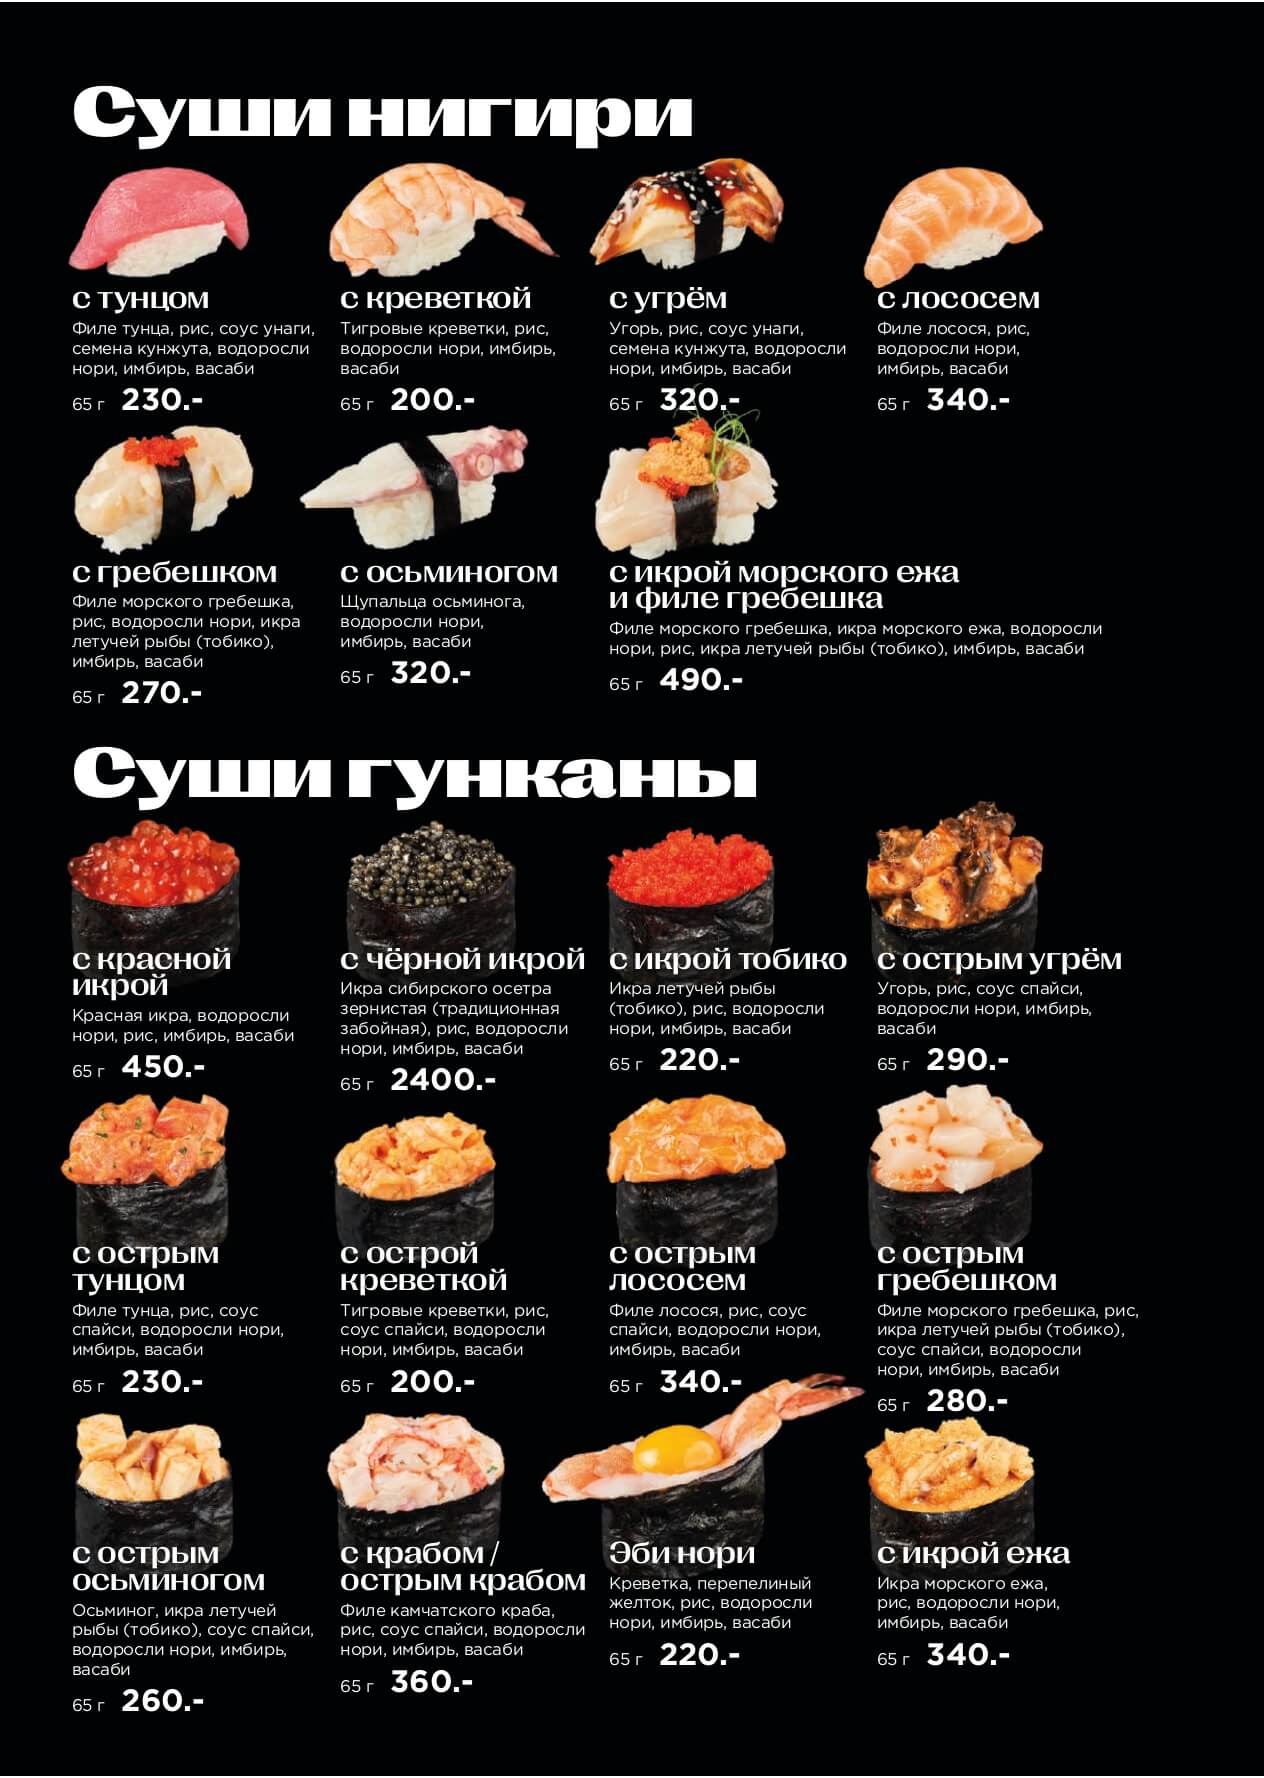 Кухня - menyu kitchen psoled szhatyj page 0026 - Ресторан 1st GALLERY KITCHEN